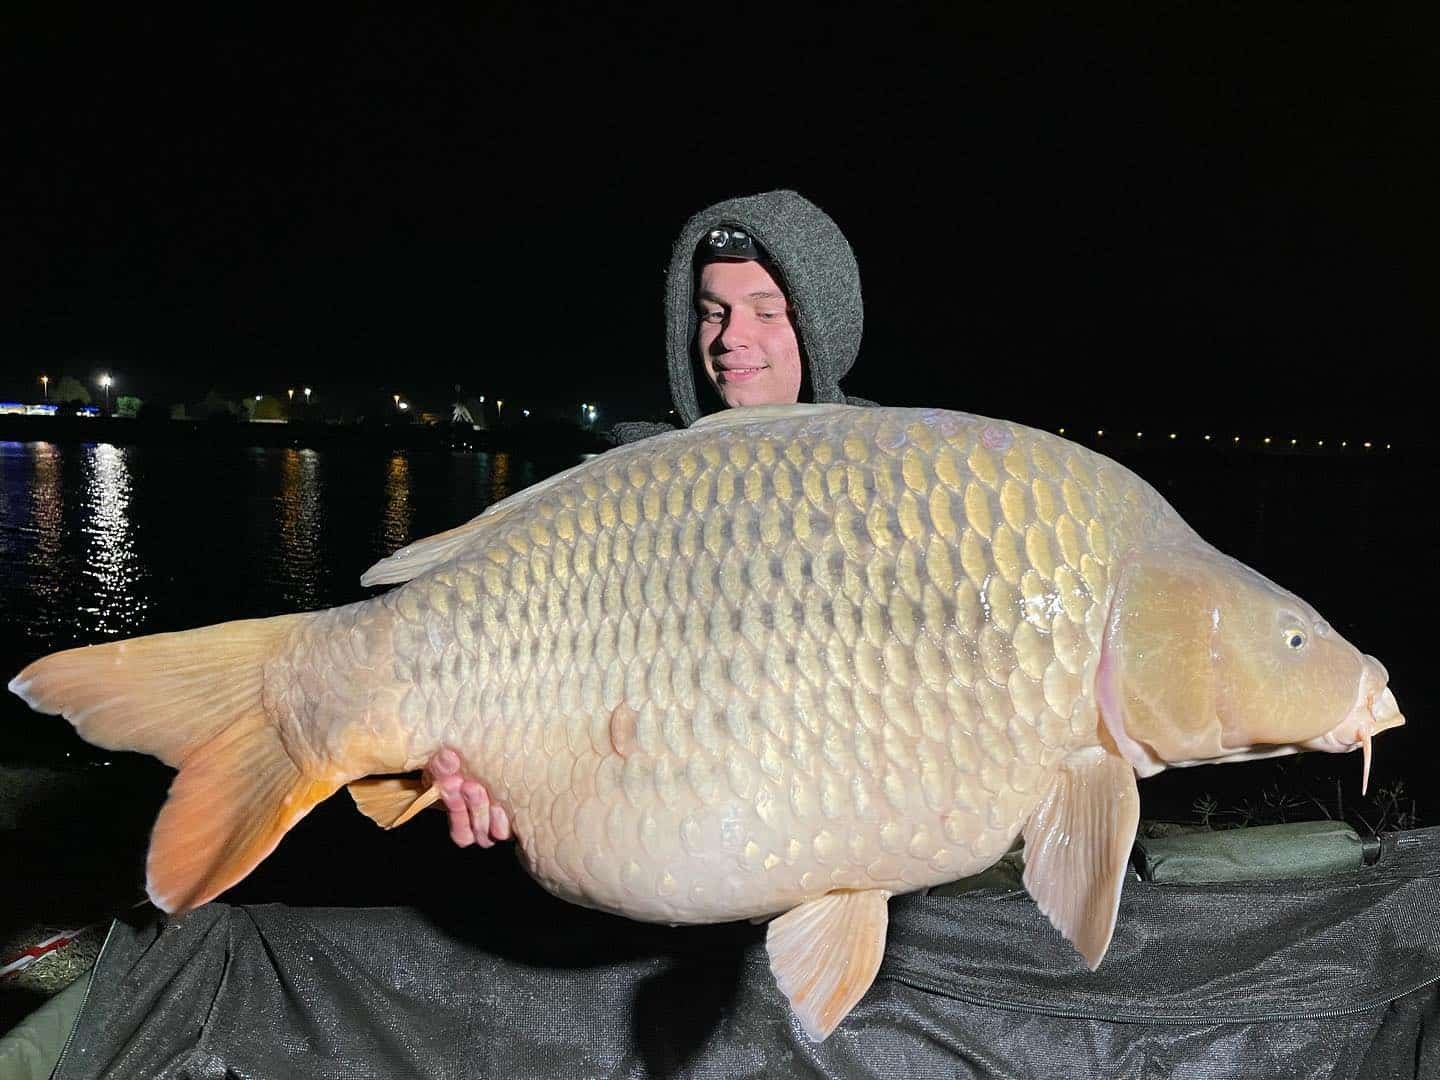 Angler holding carp caught on Lake Ontario in Slovenia, Europe